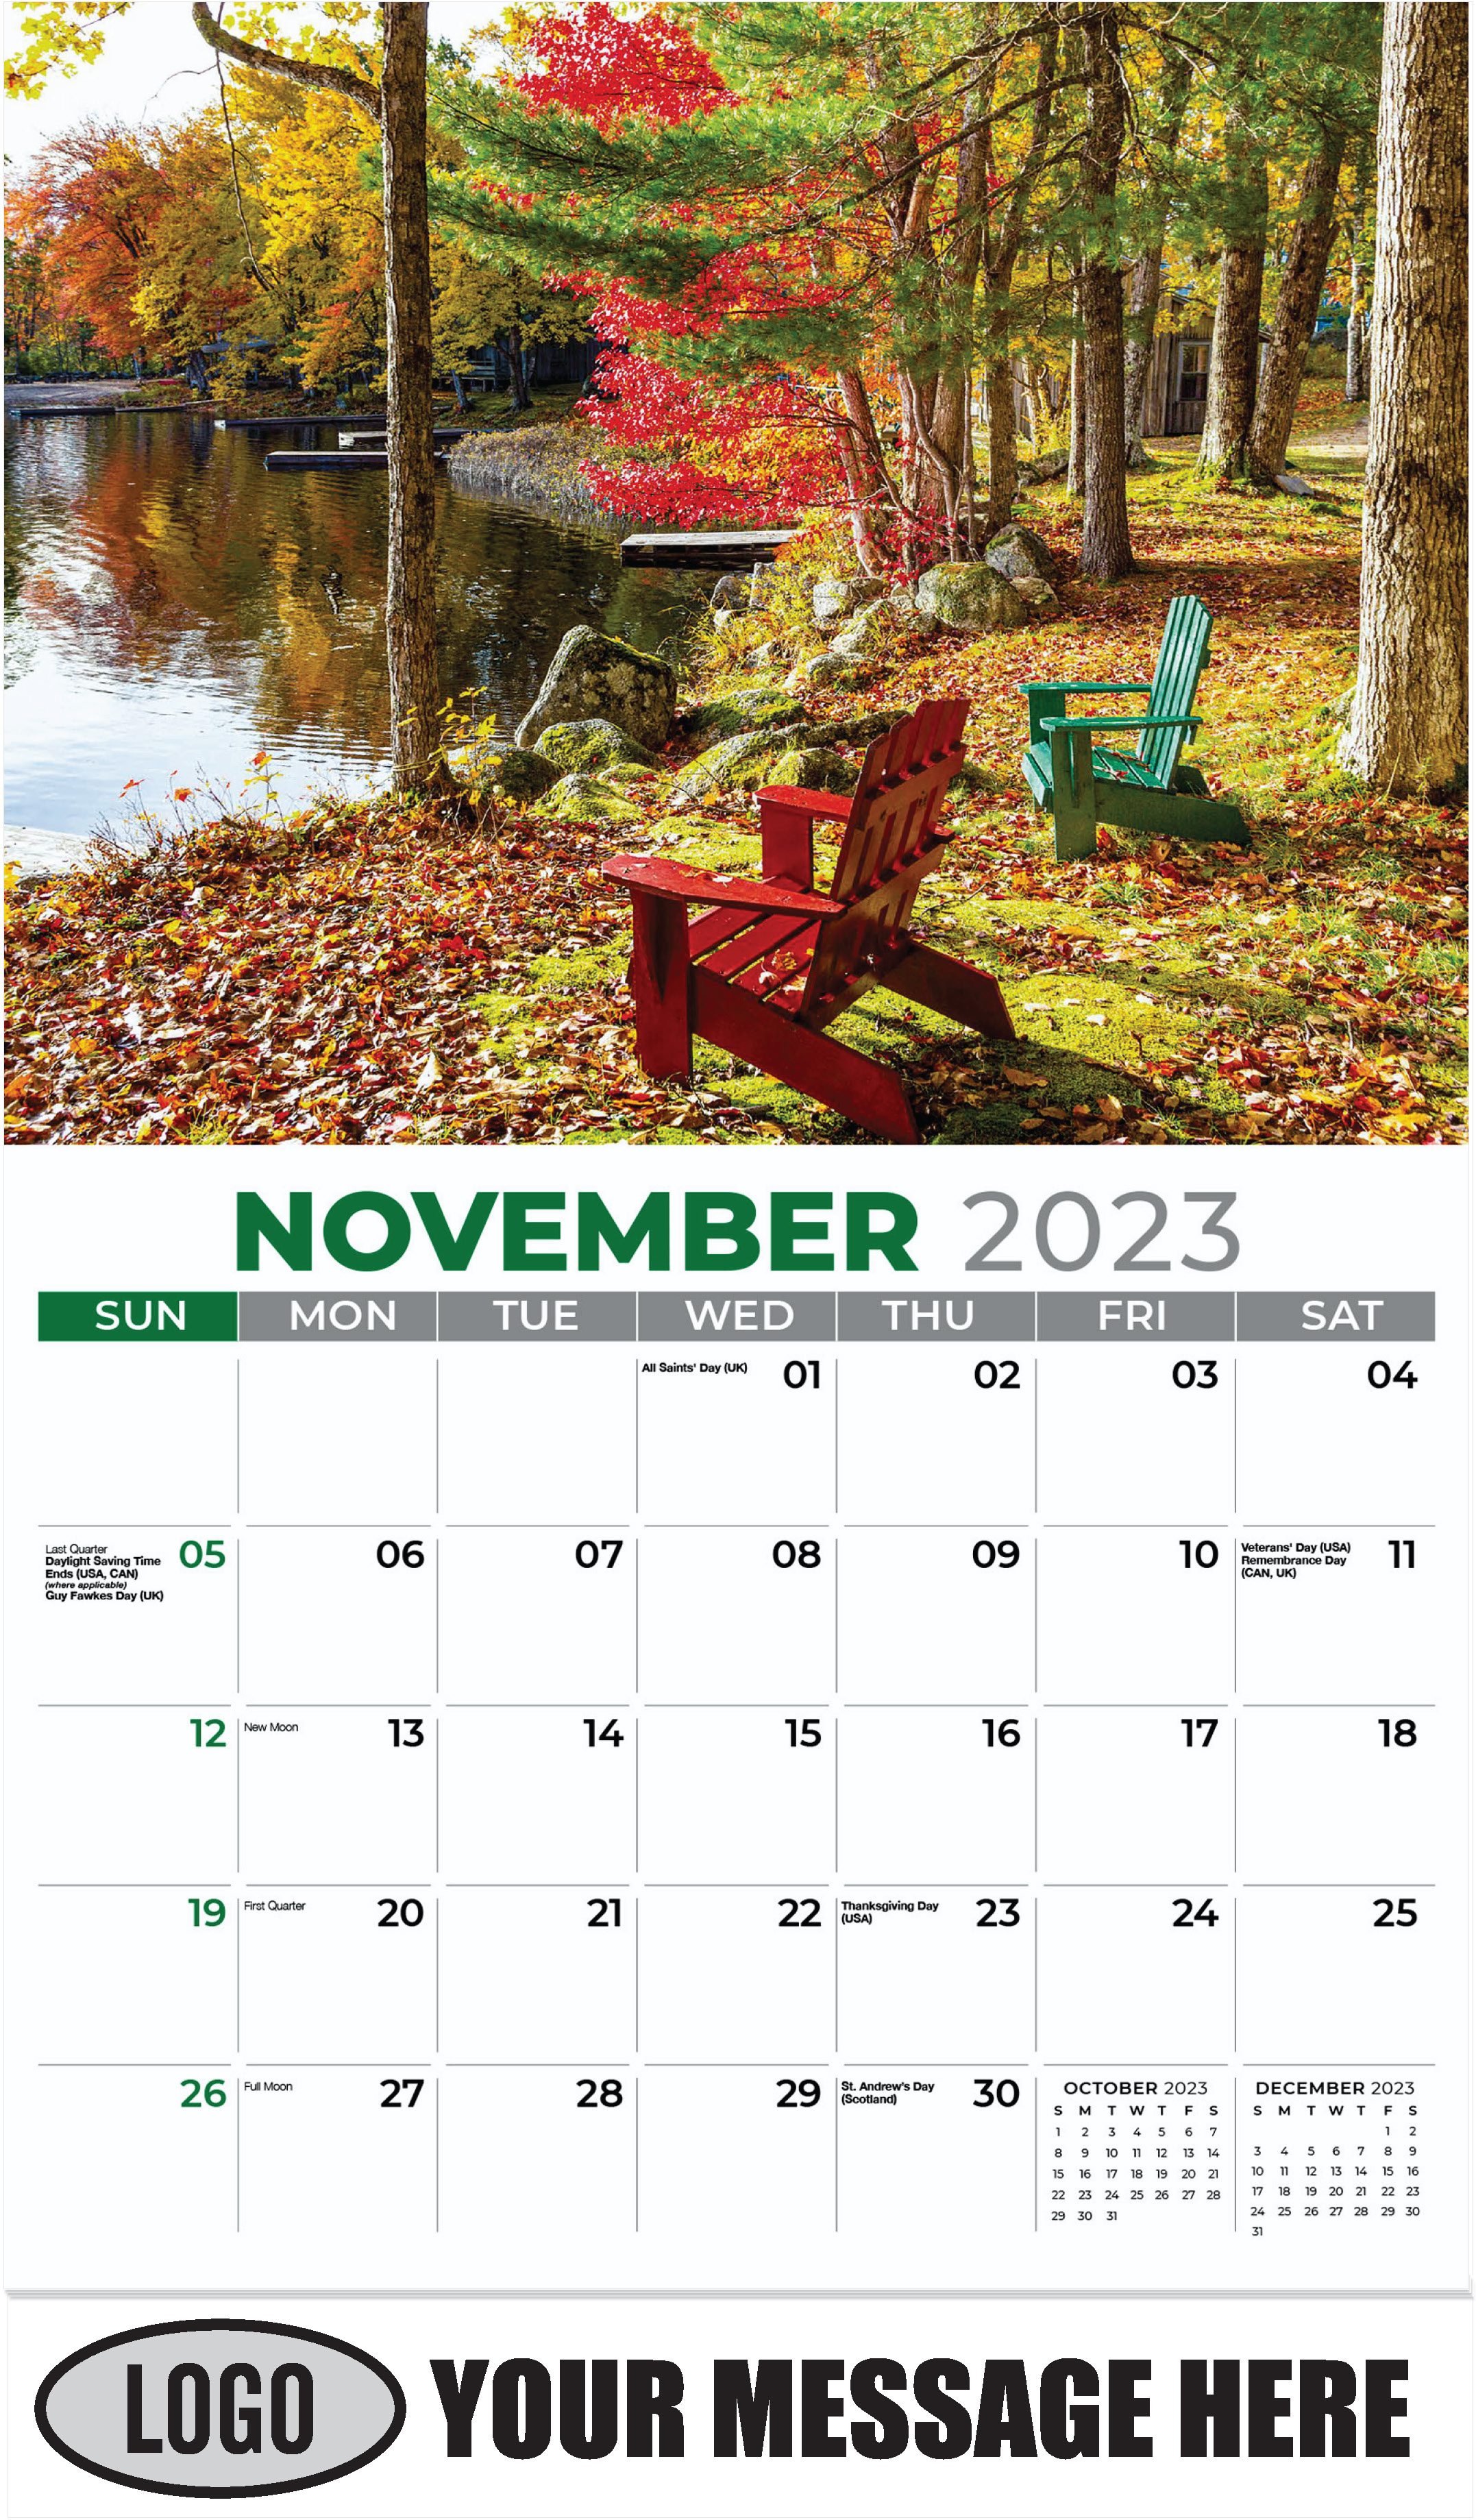 Lake in Autumn - November - Country Spirit 2023 Promotional Calendar